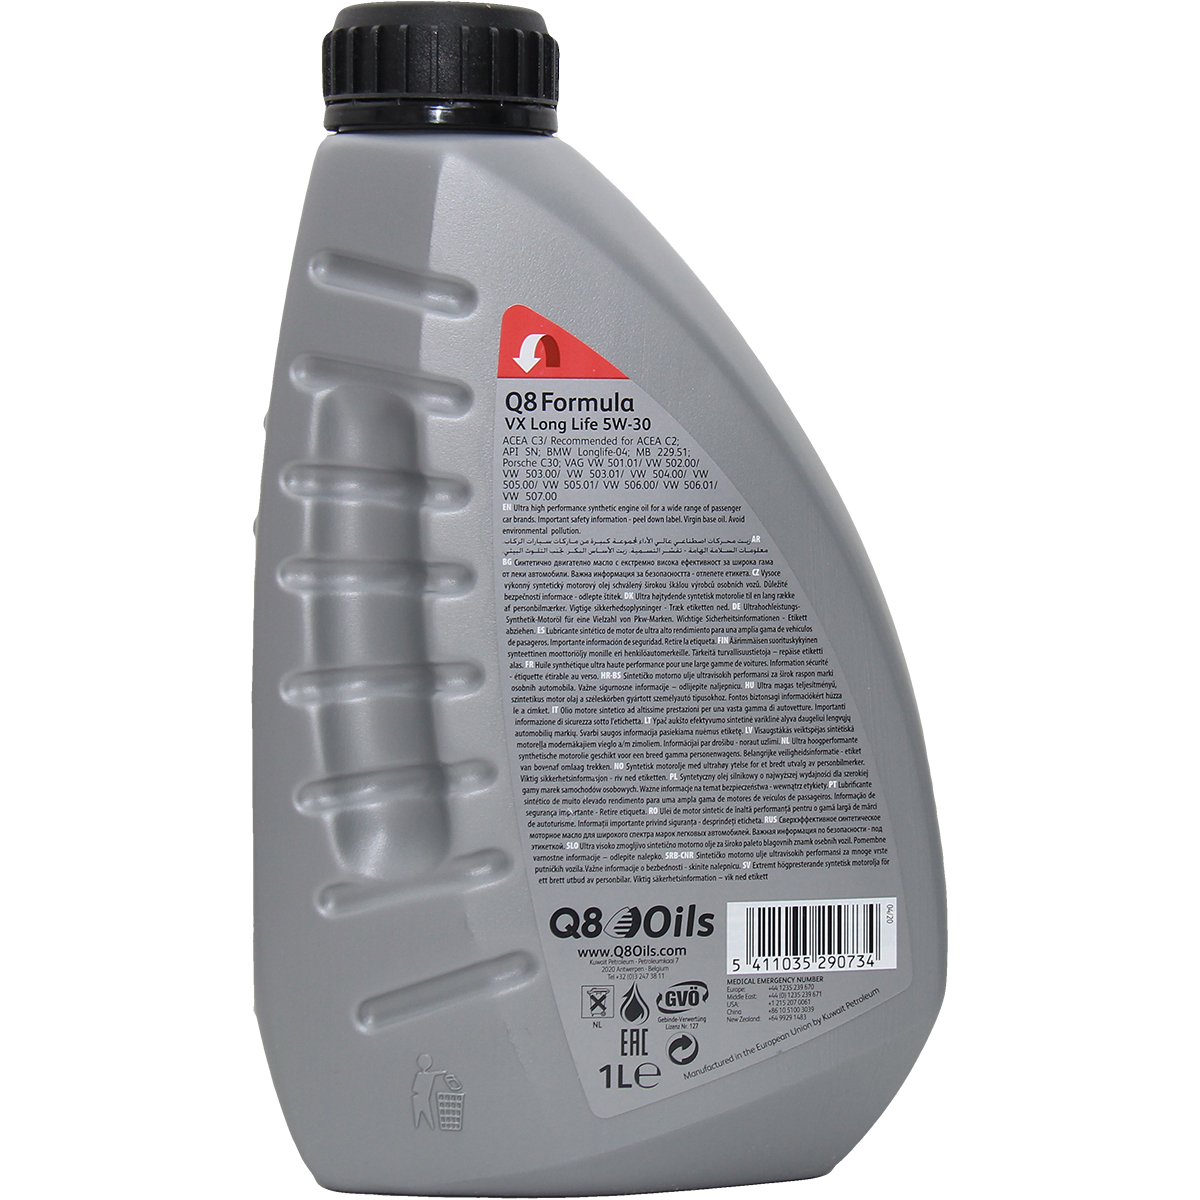 Q8 Formula VX Long Life 5W-30 1 Liter